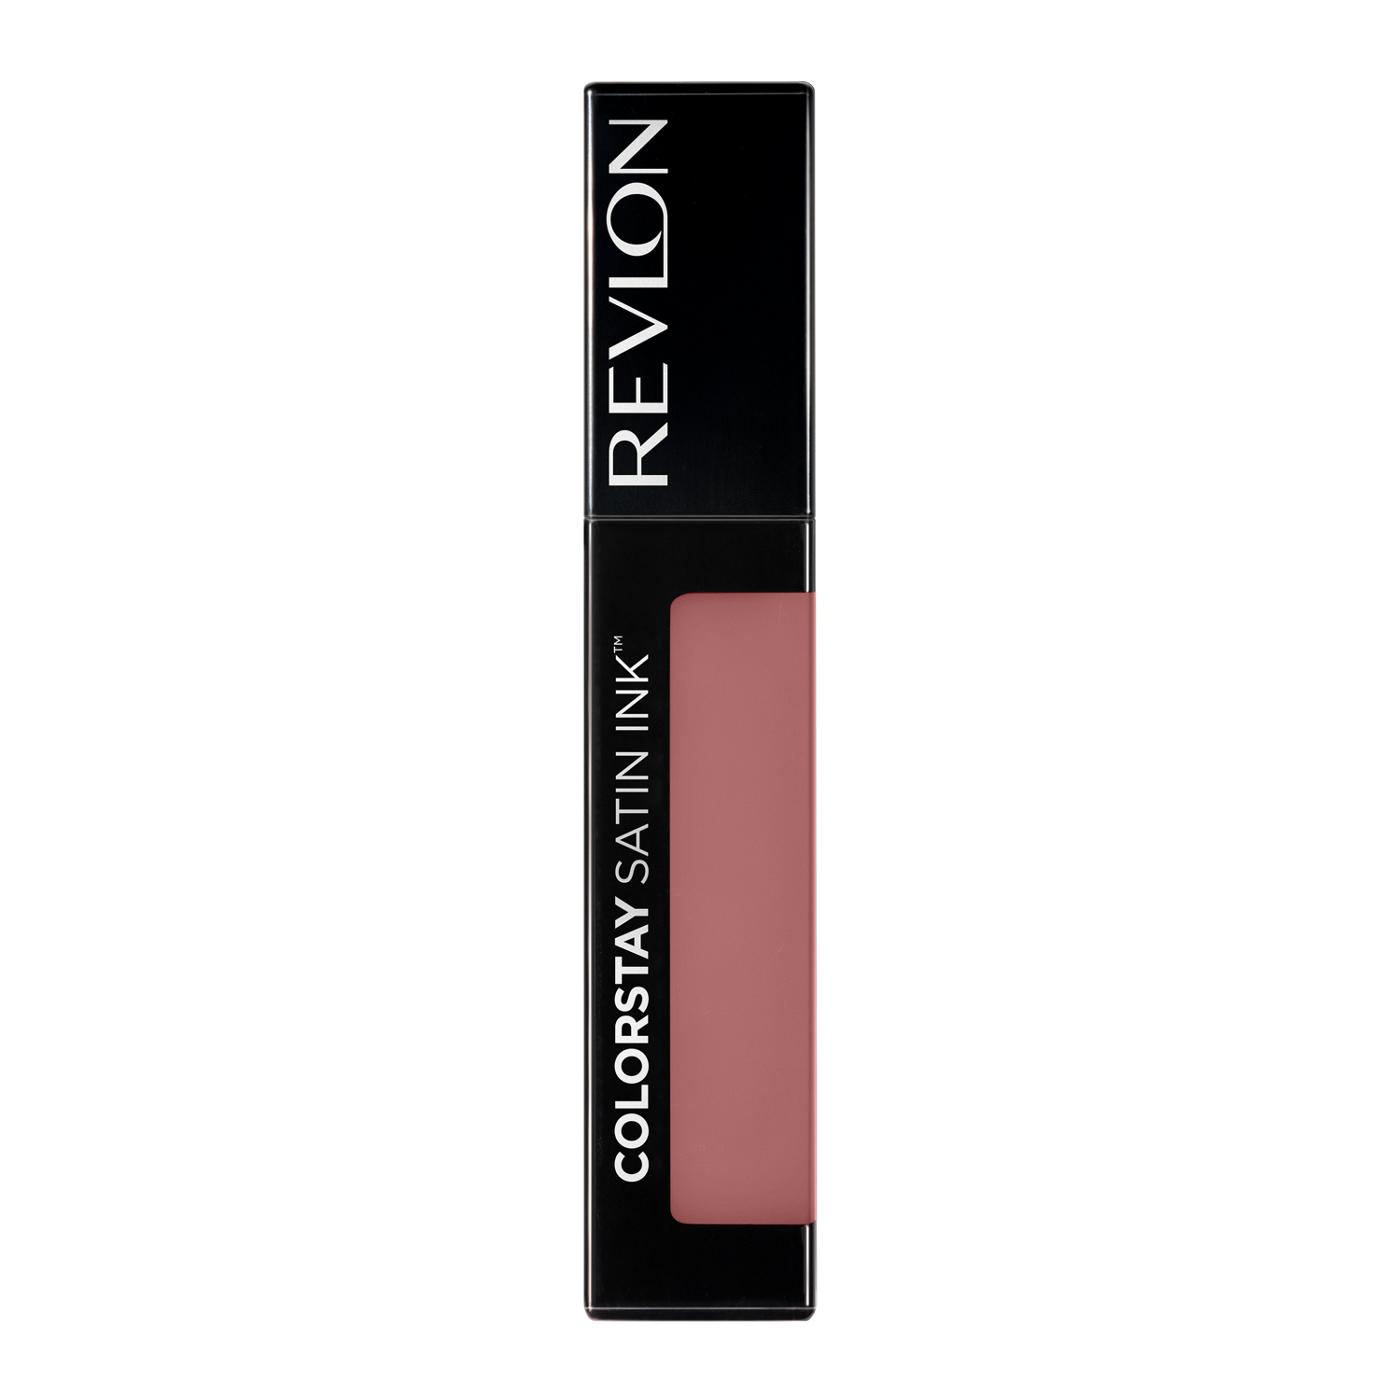 Revlon ColorStay Satin Ink Liquid Lipstick - Partner in Crime; image 1 of 7